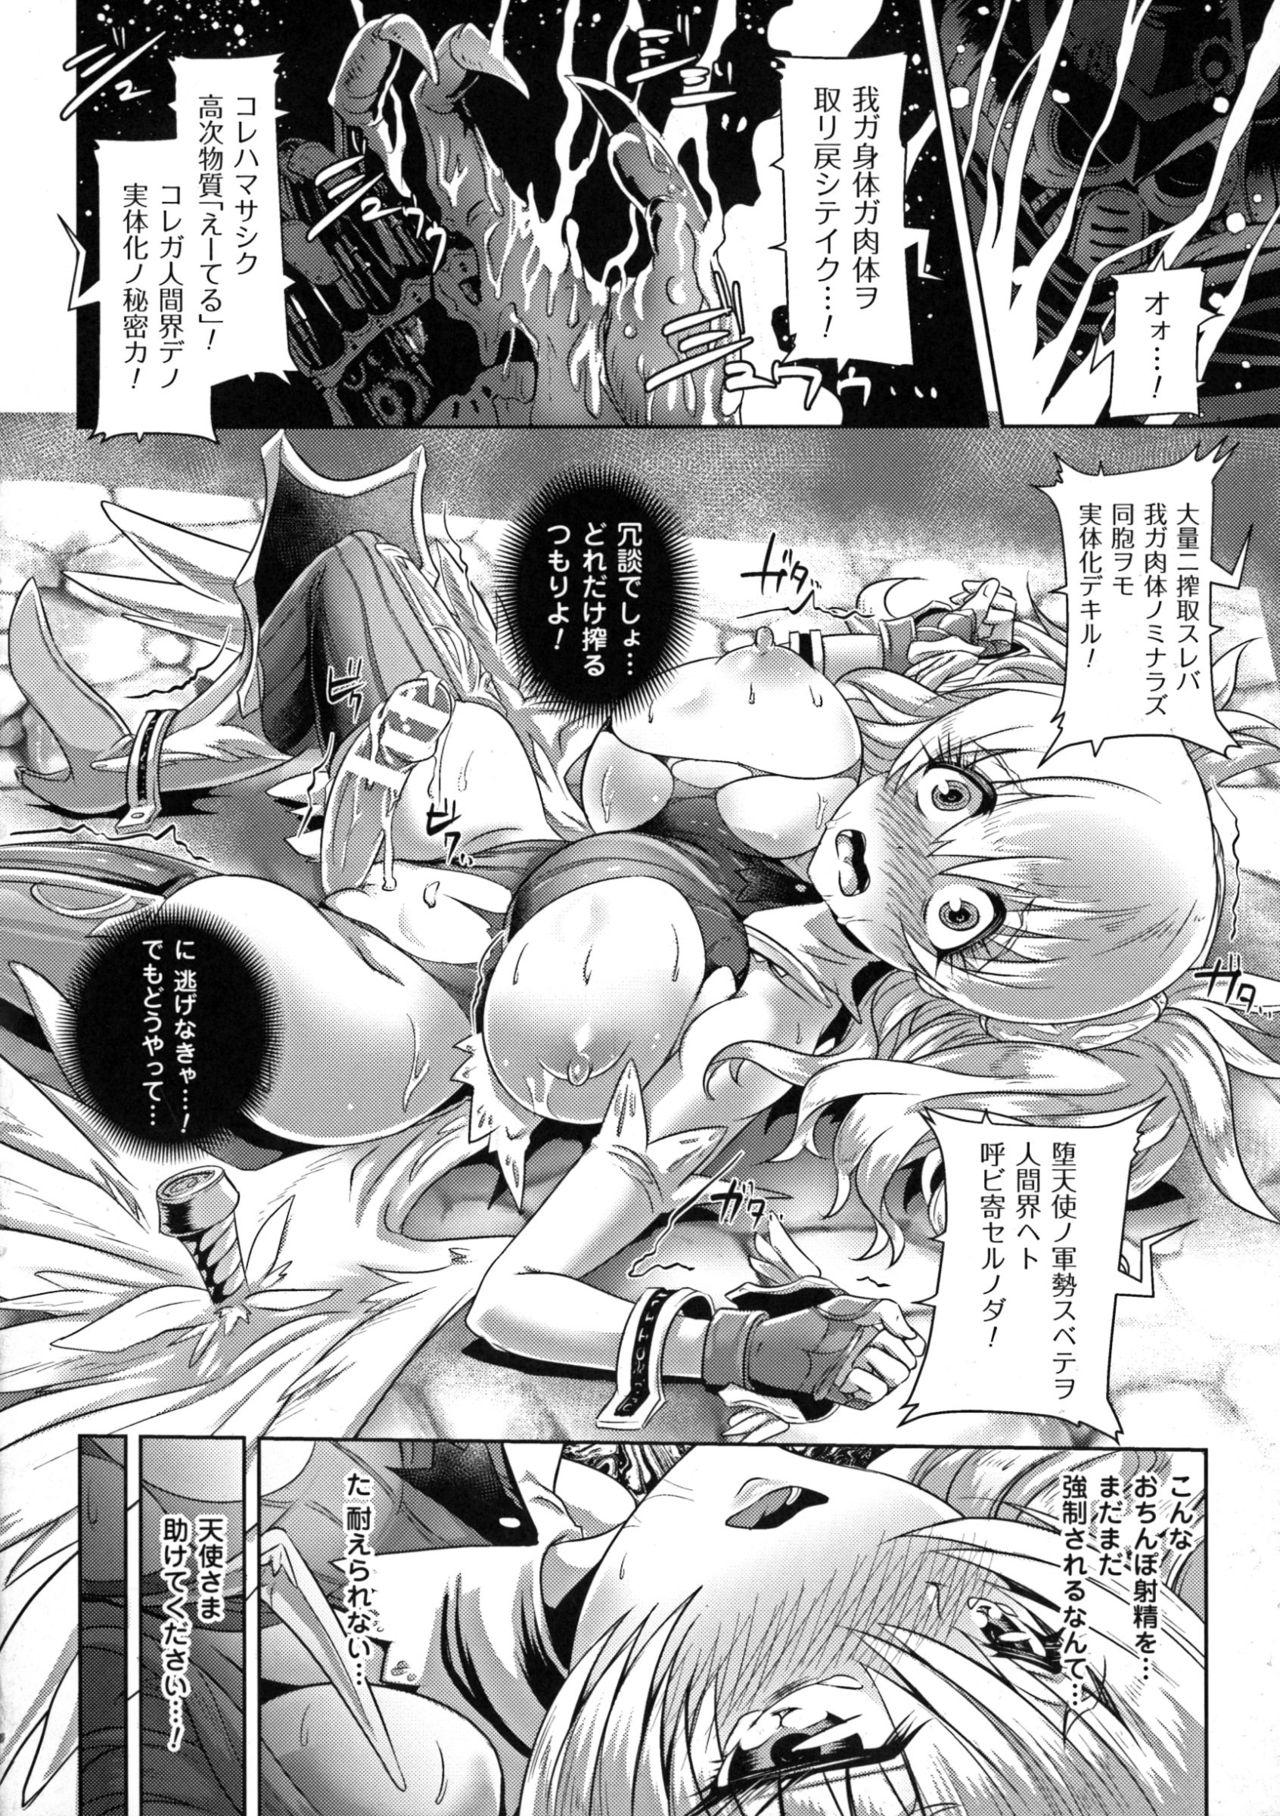 Seigi no Heroine Kangoku File DX vol. 5 169